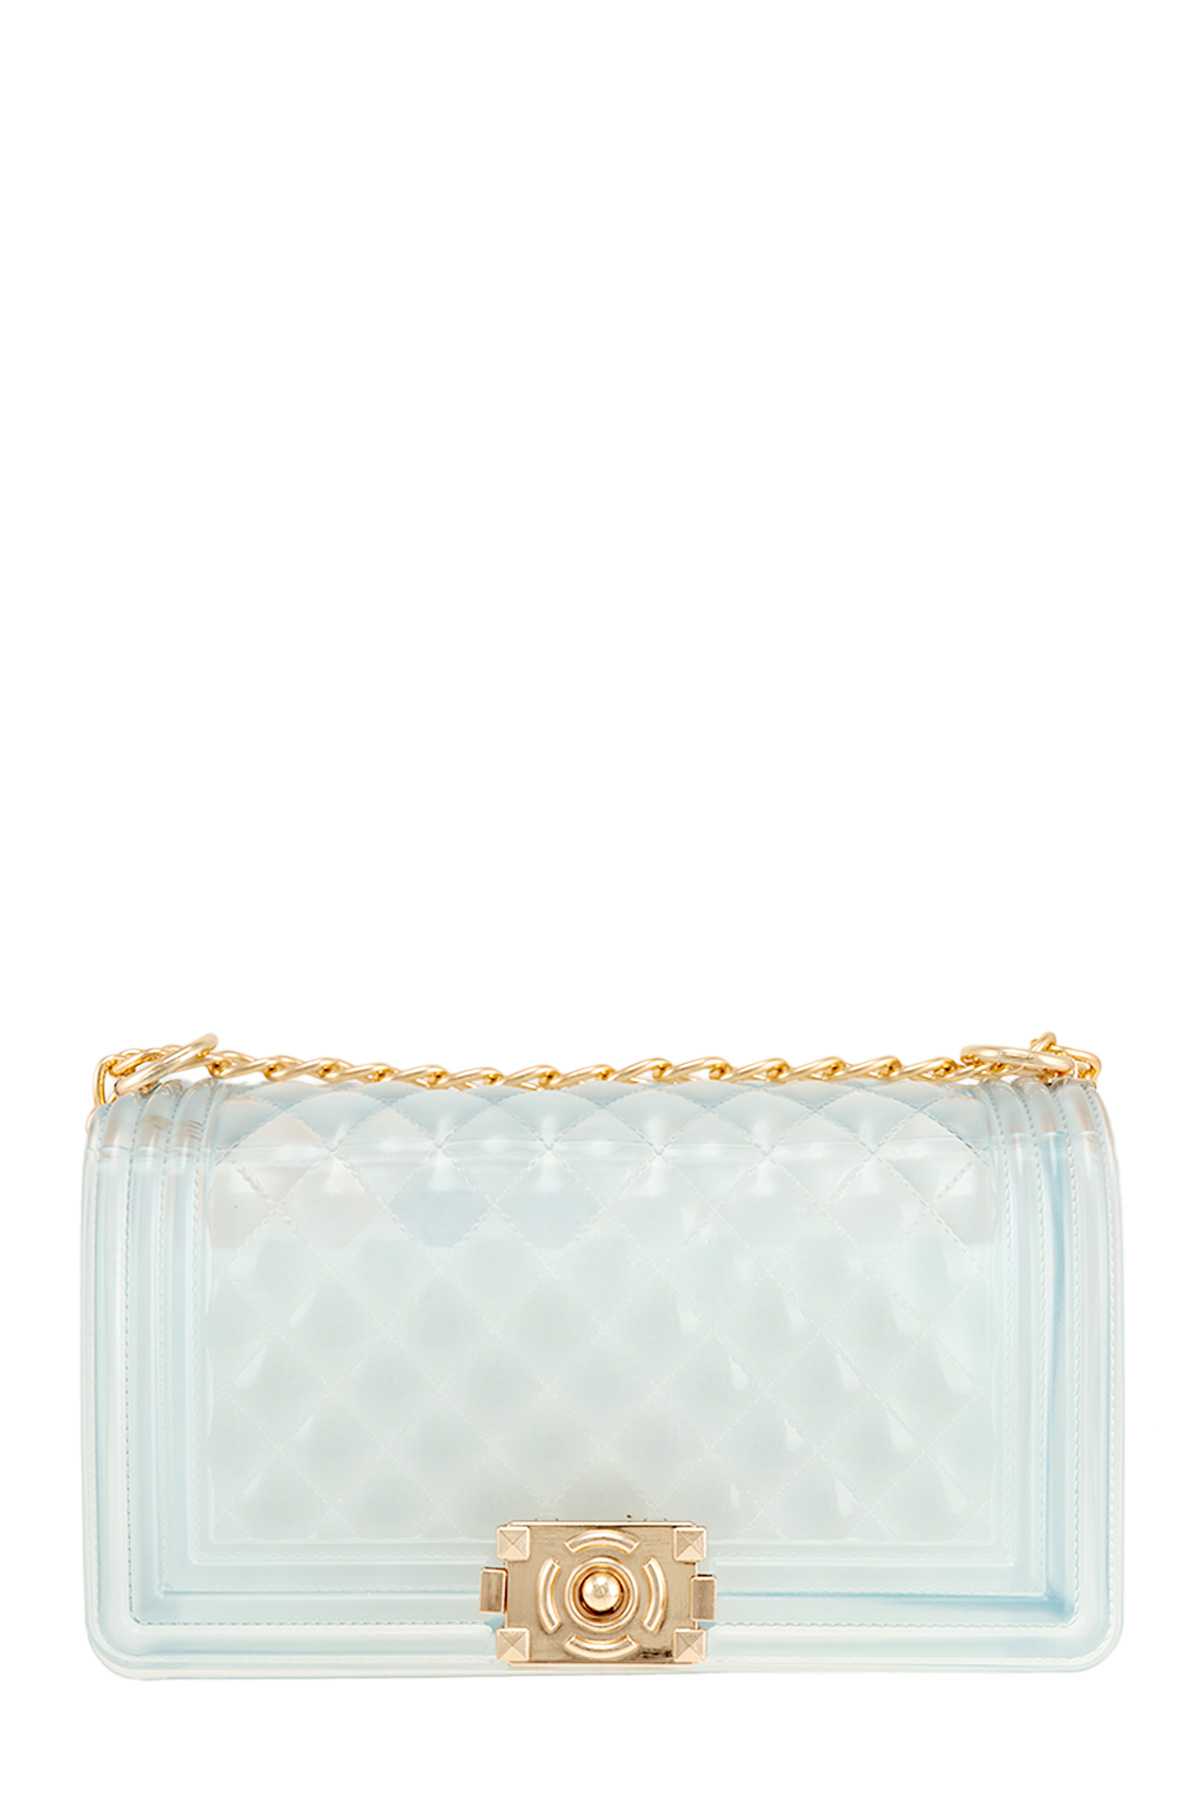 Glossy Feel Diamond Pattern Jelly Shoulder Bag